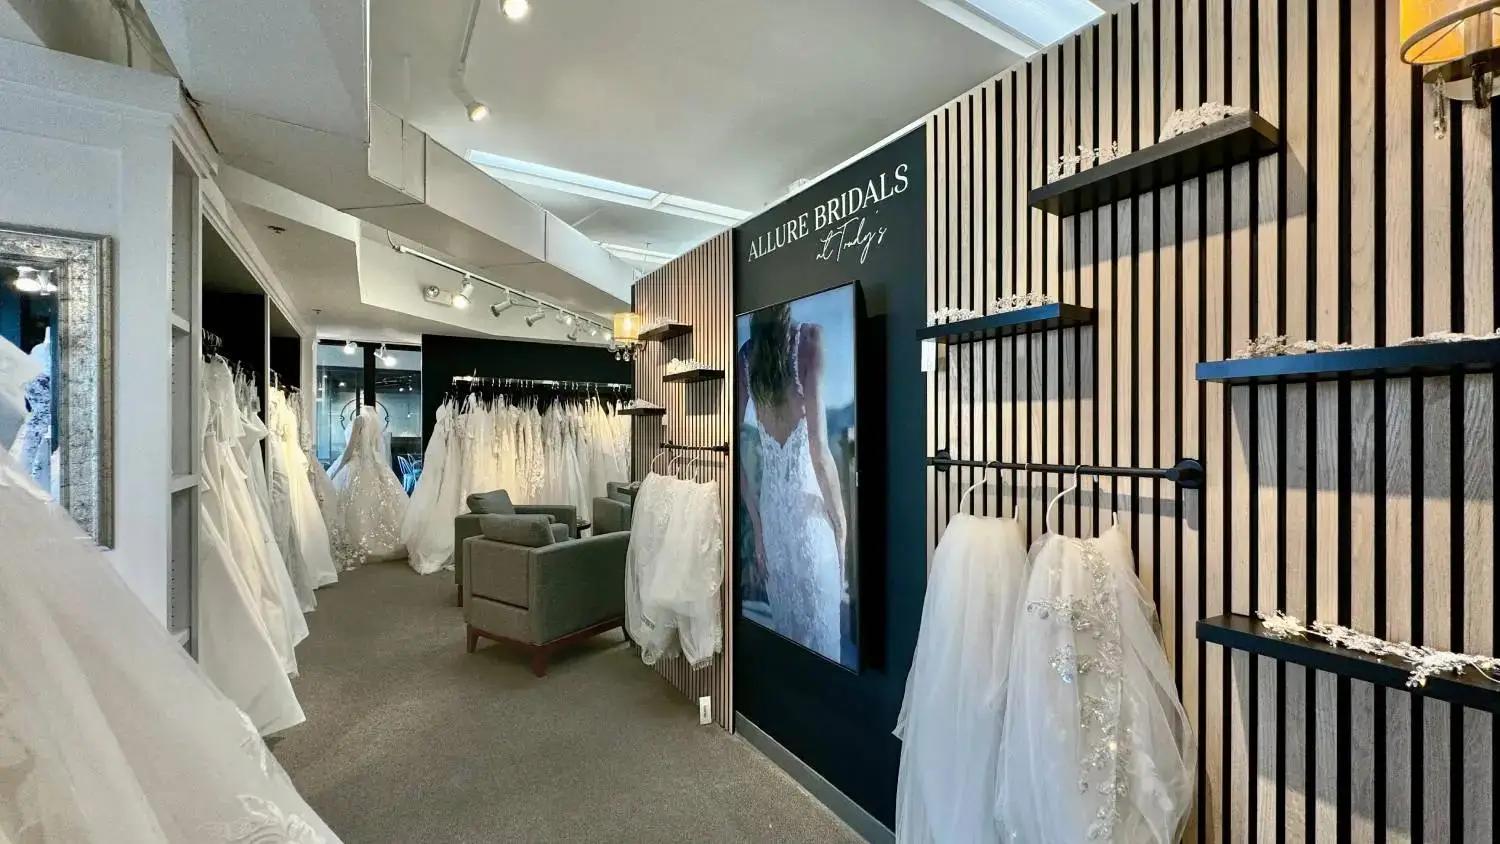 Allure Bridals showroom inside Trudys Brides